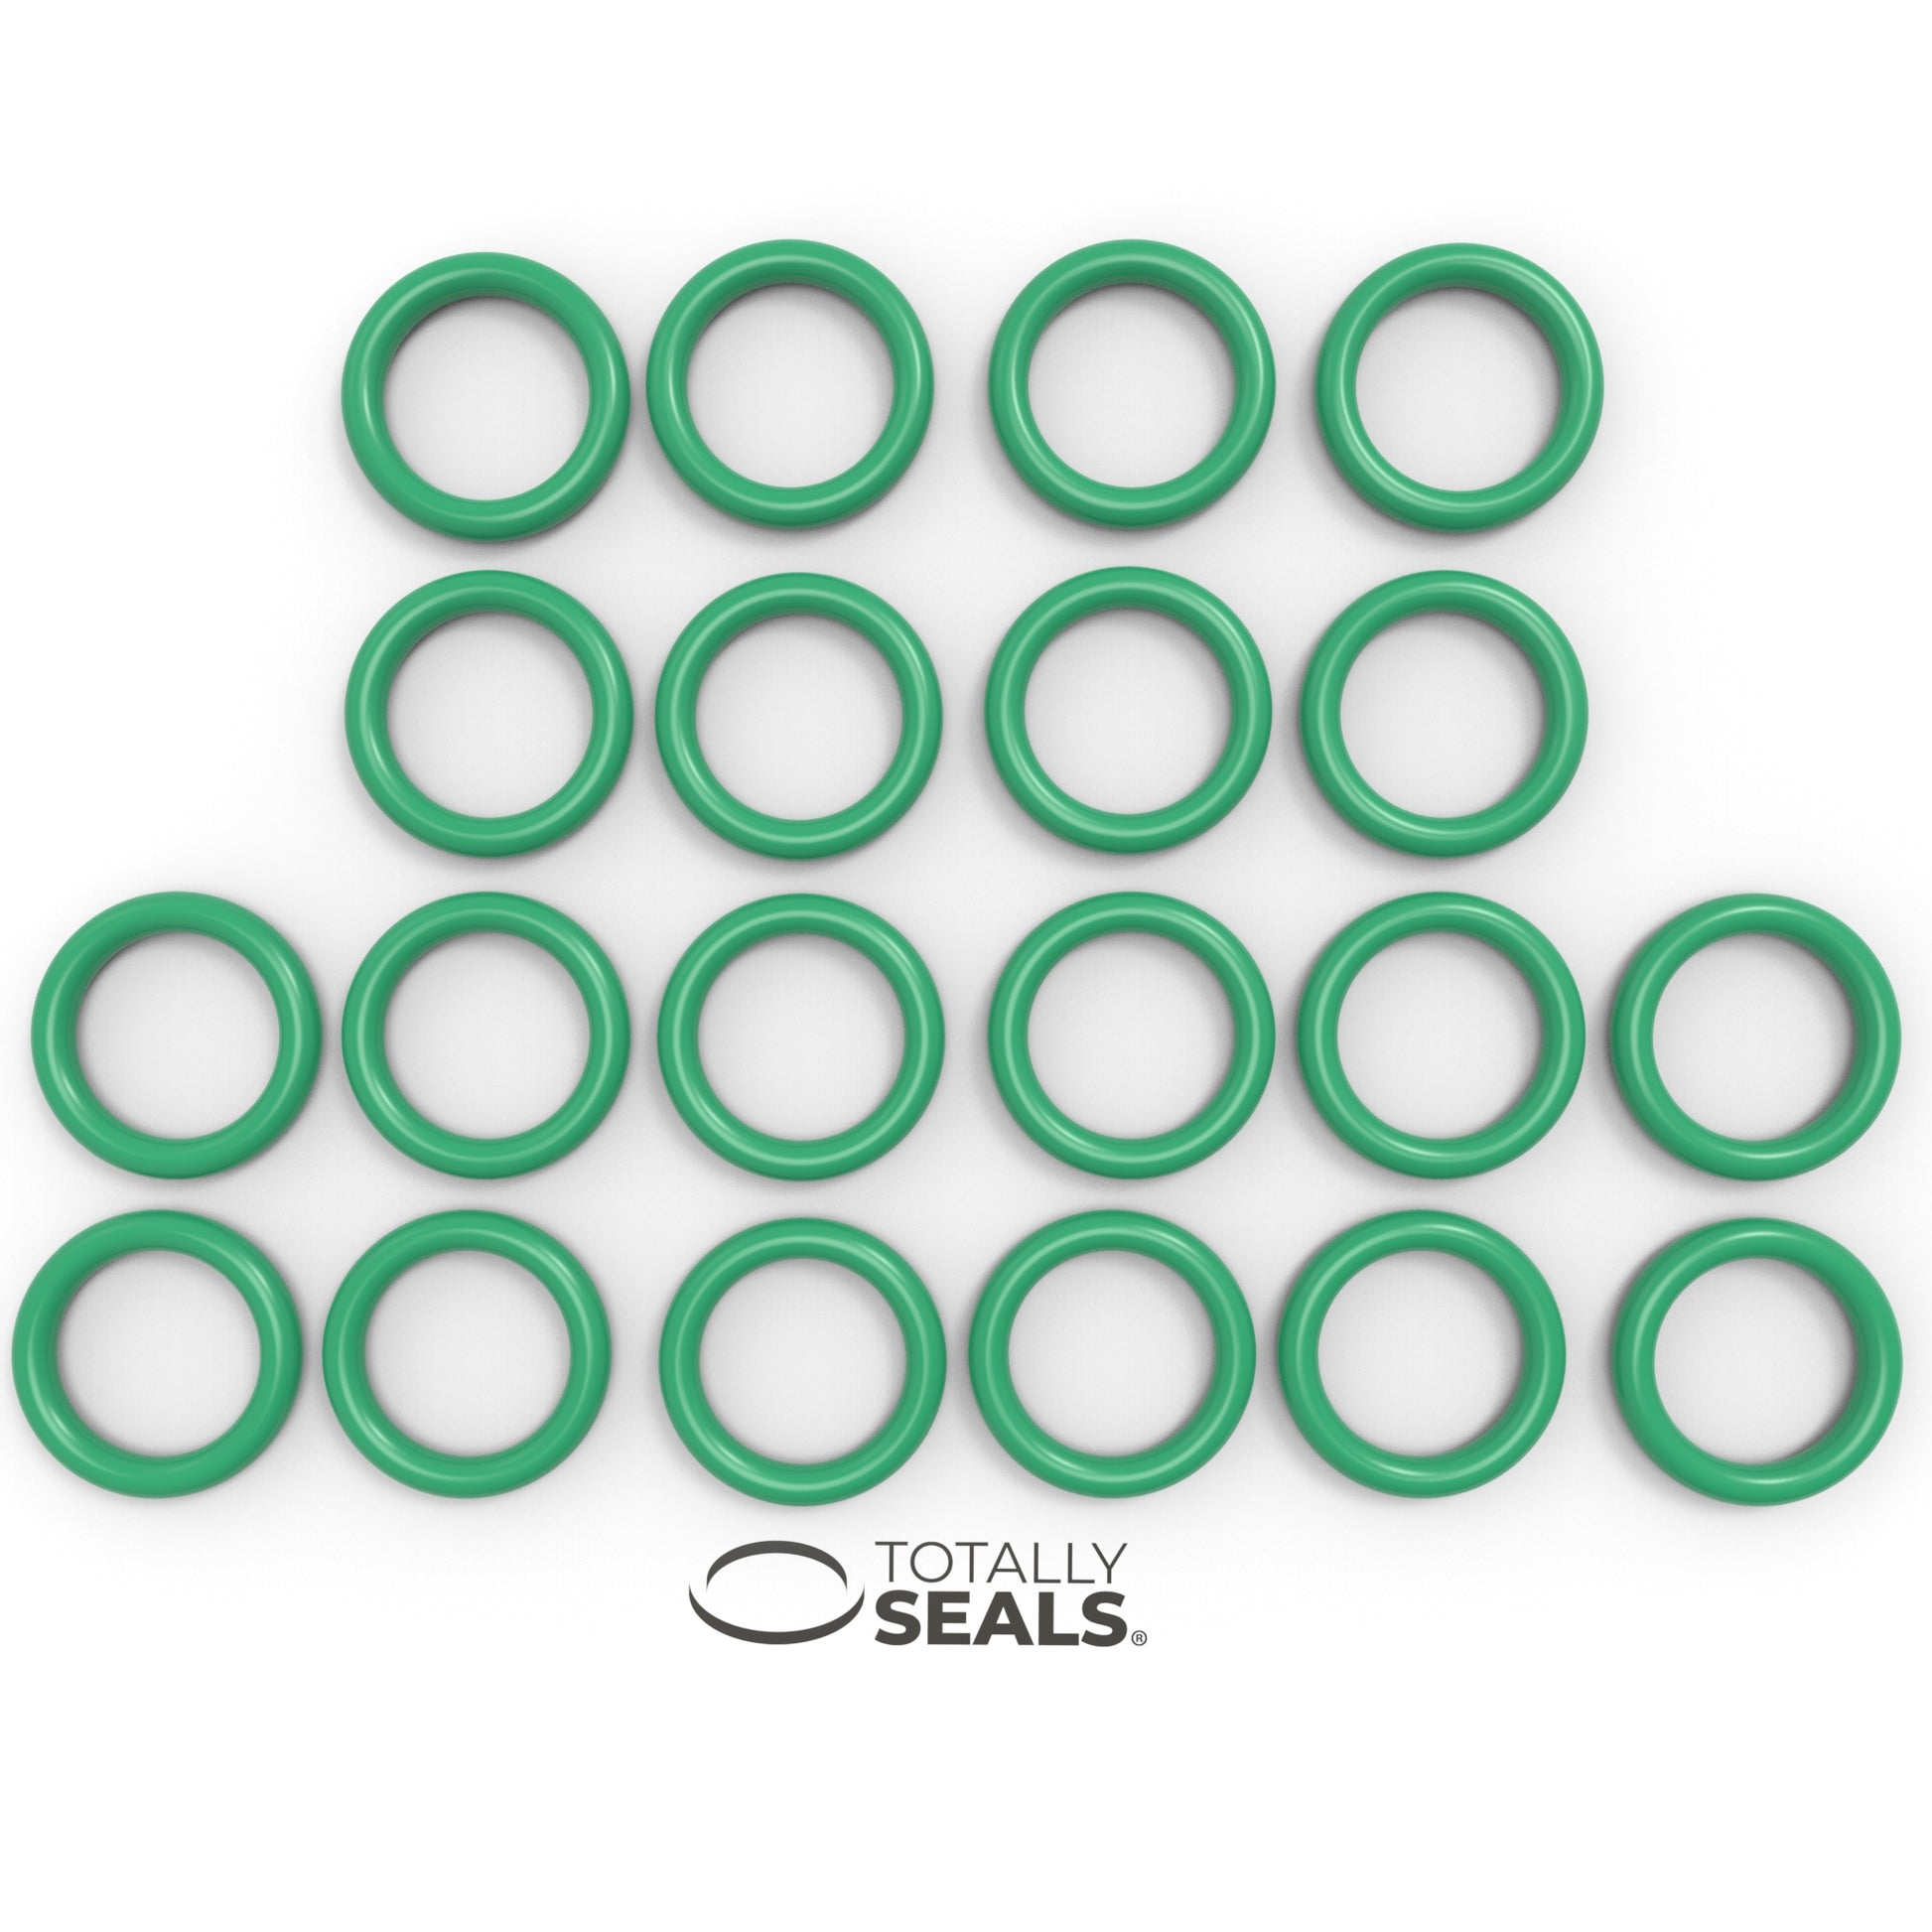 25mm x 2.5mm (30mm OD) FKM (Viton™) O-Rings - Totally Seals®